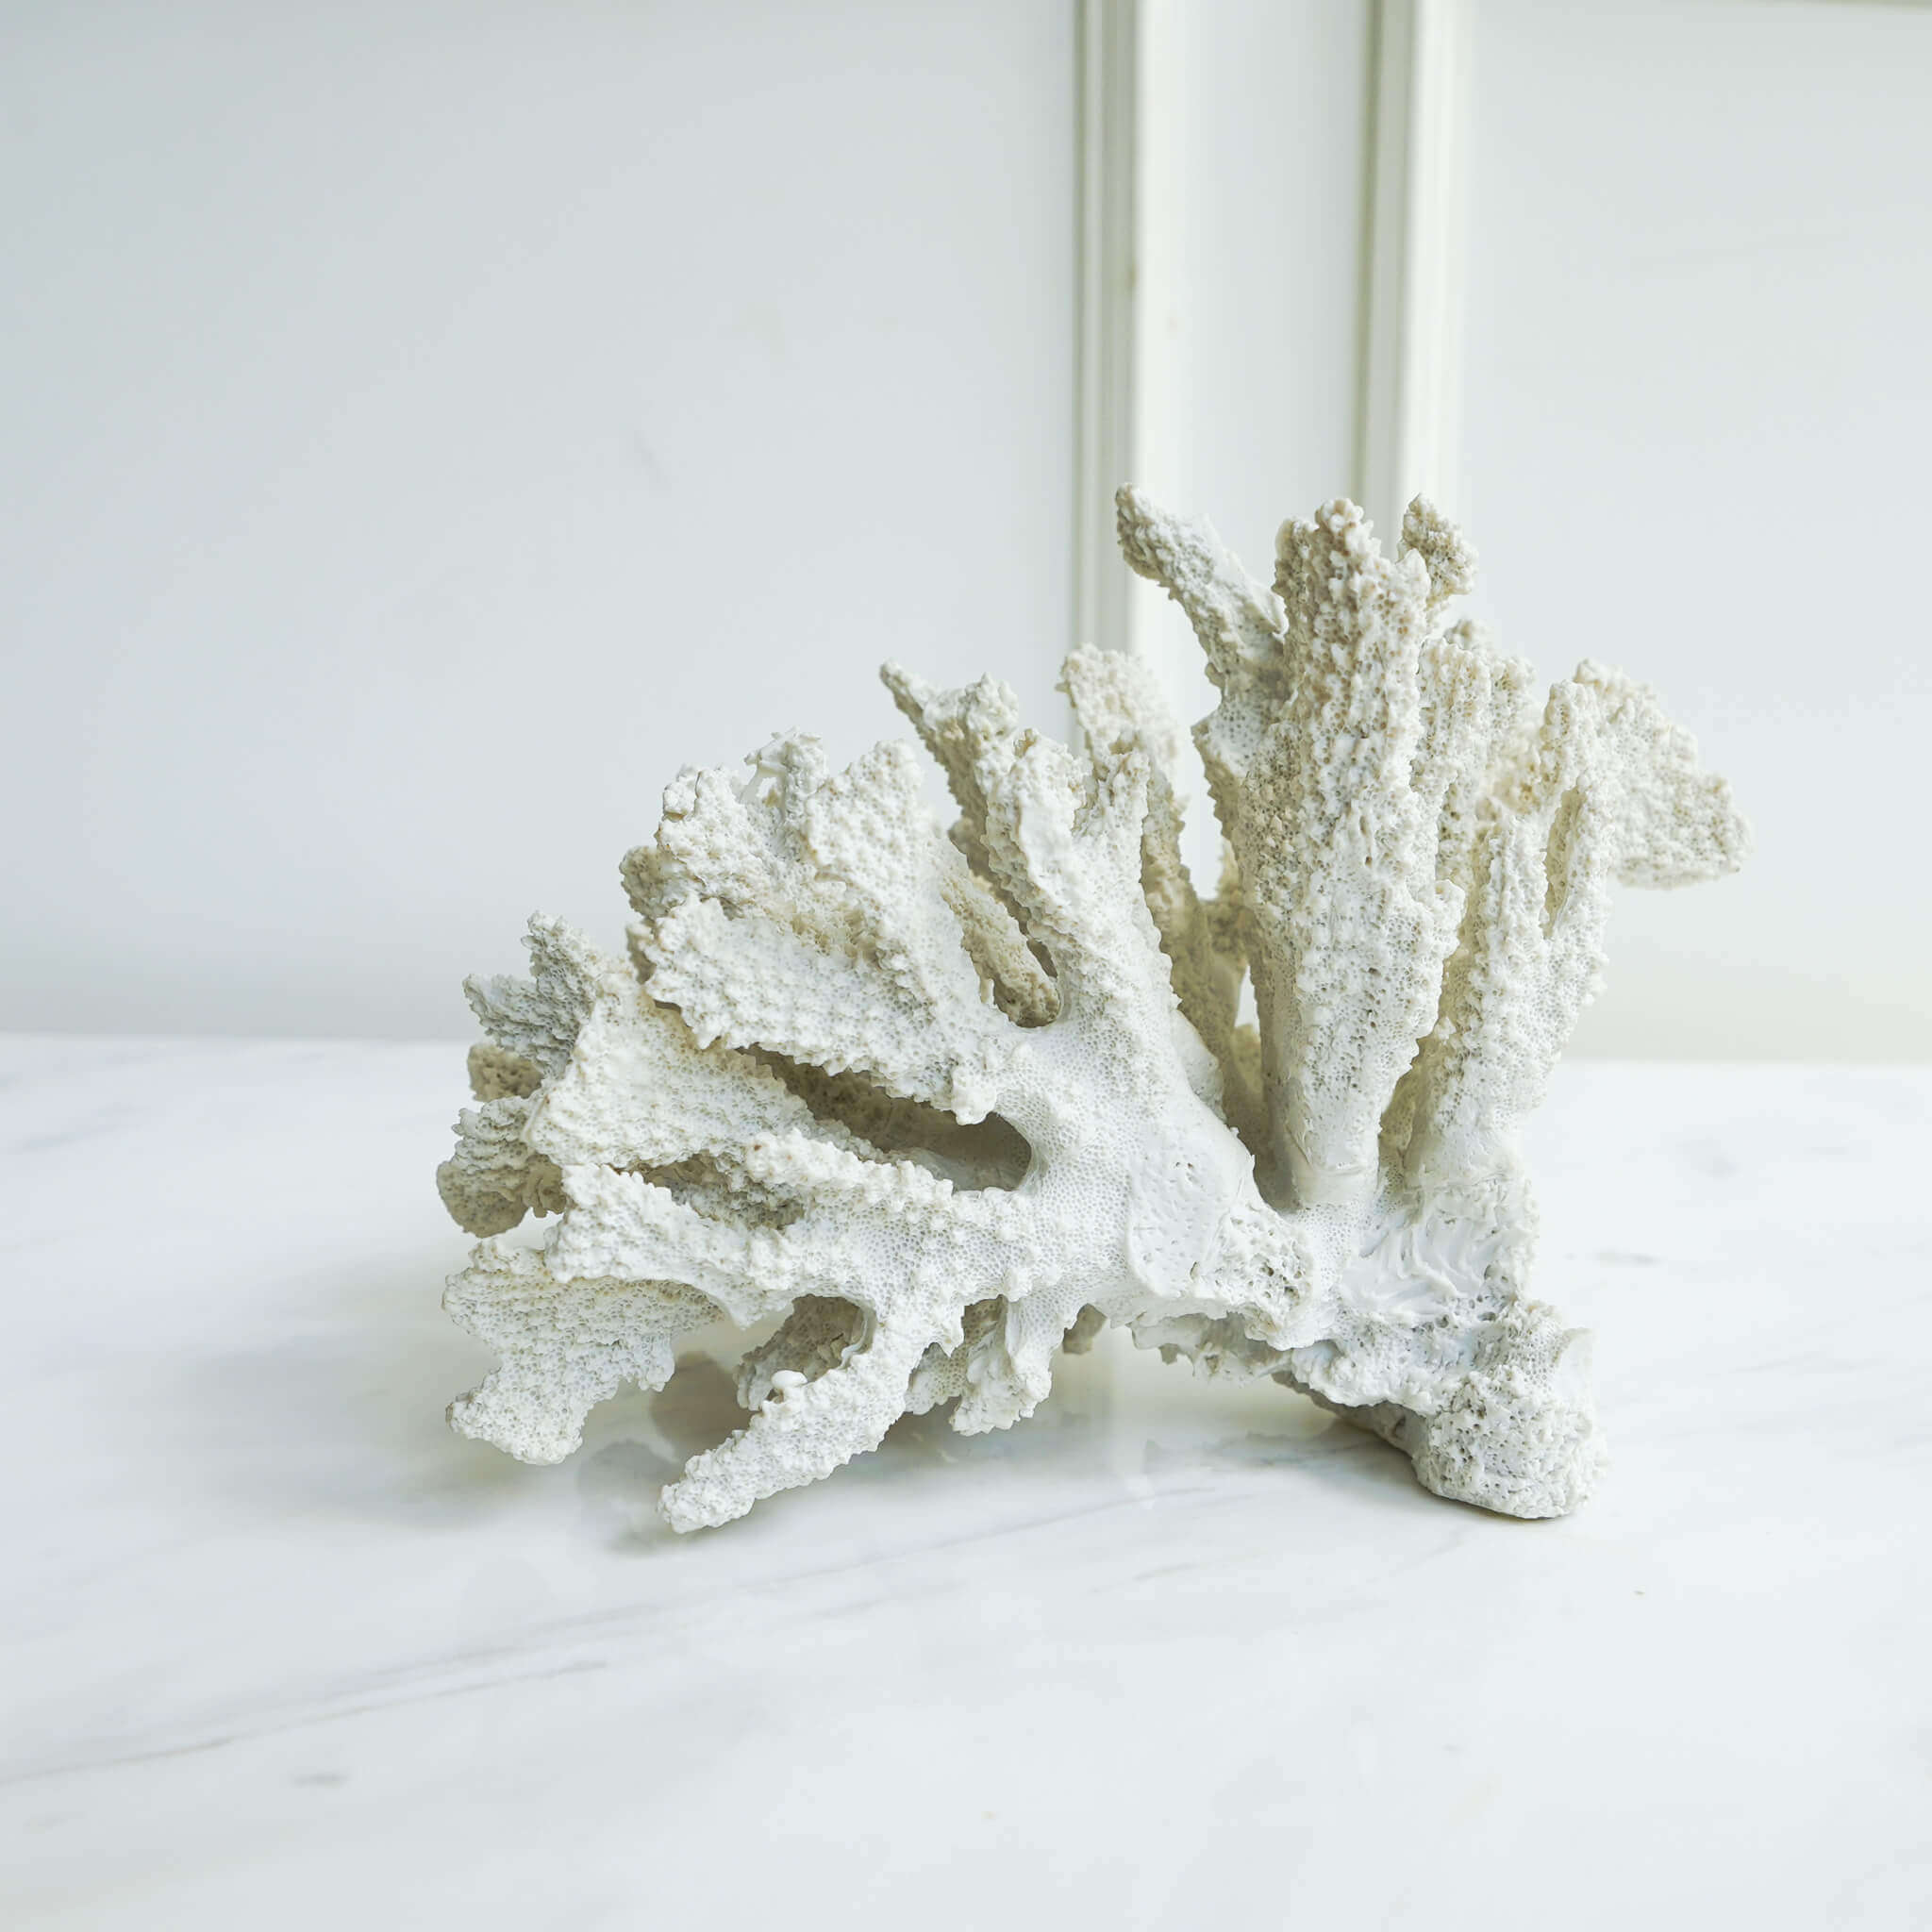 Blue Sea Coral Sculpture for Decorating or Fish Tank Aquarium -NOT REAL  CORAL- | eBay